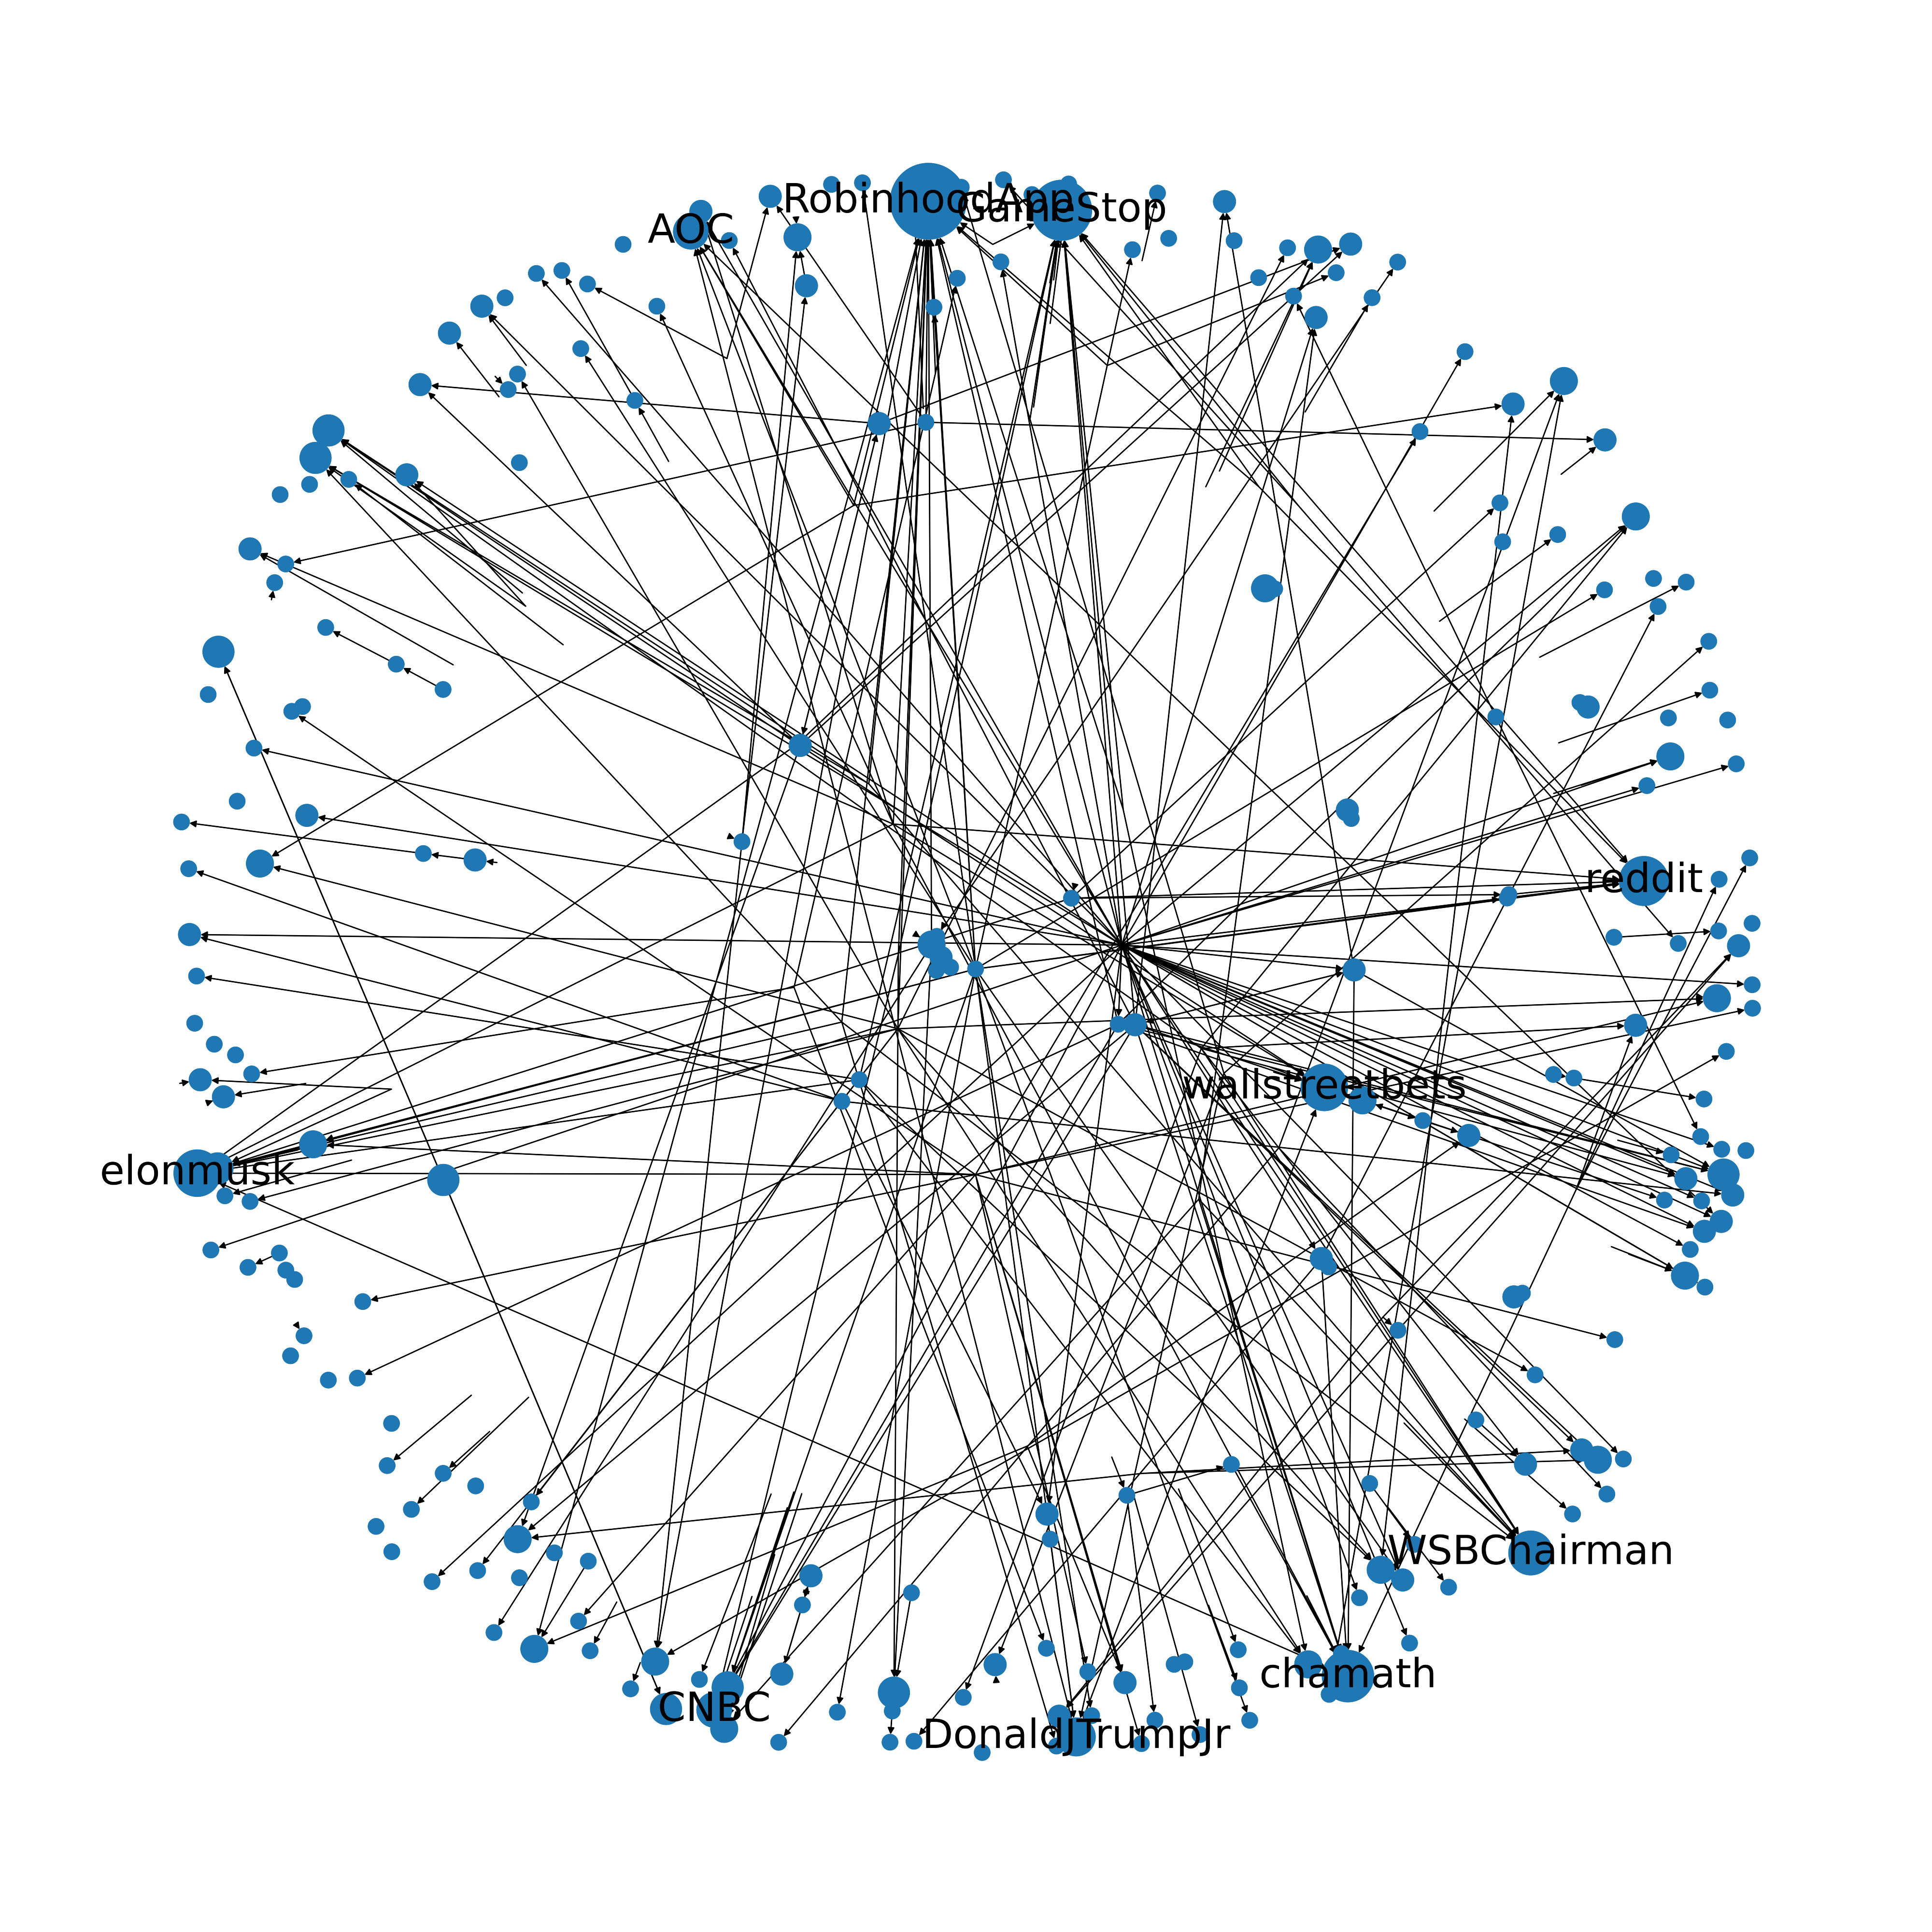 #gamestop Influencer Network, plotted using NetworkX | Skanda Vivek